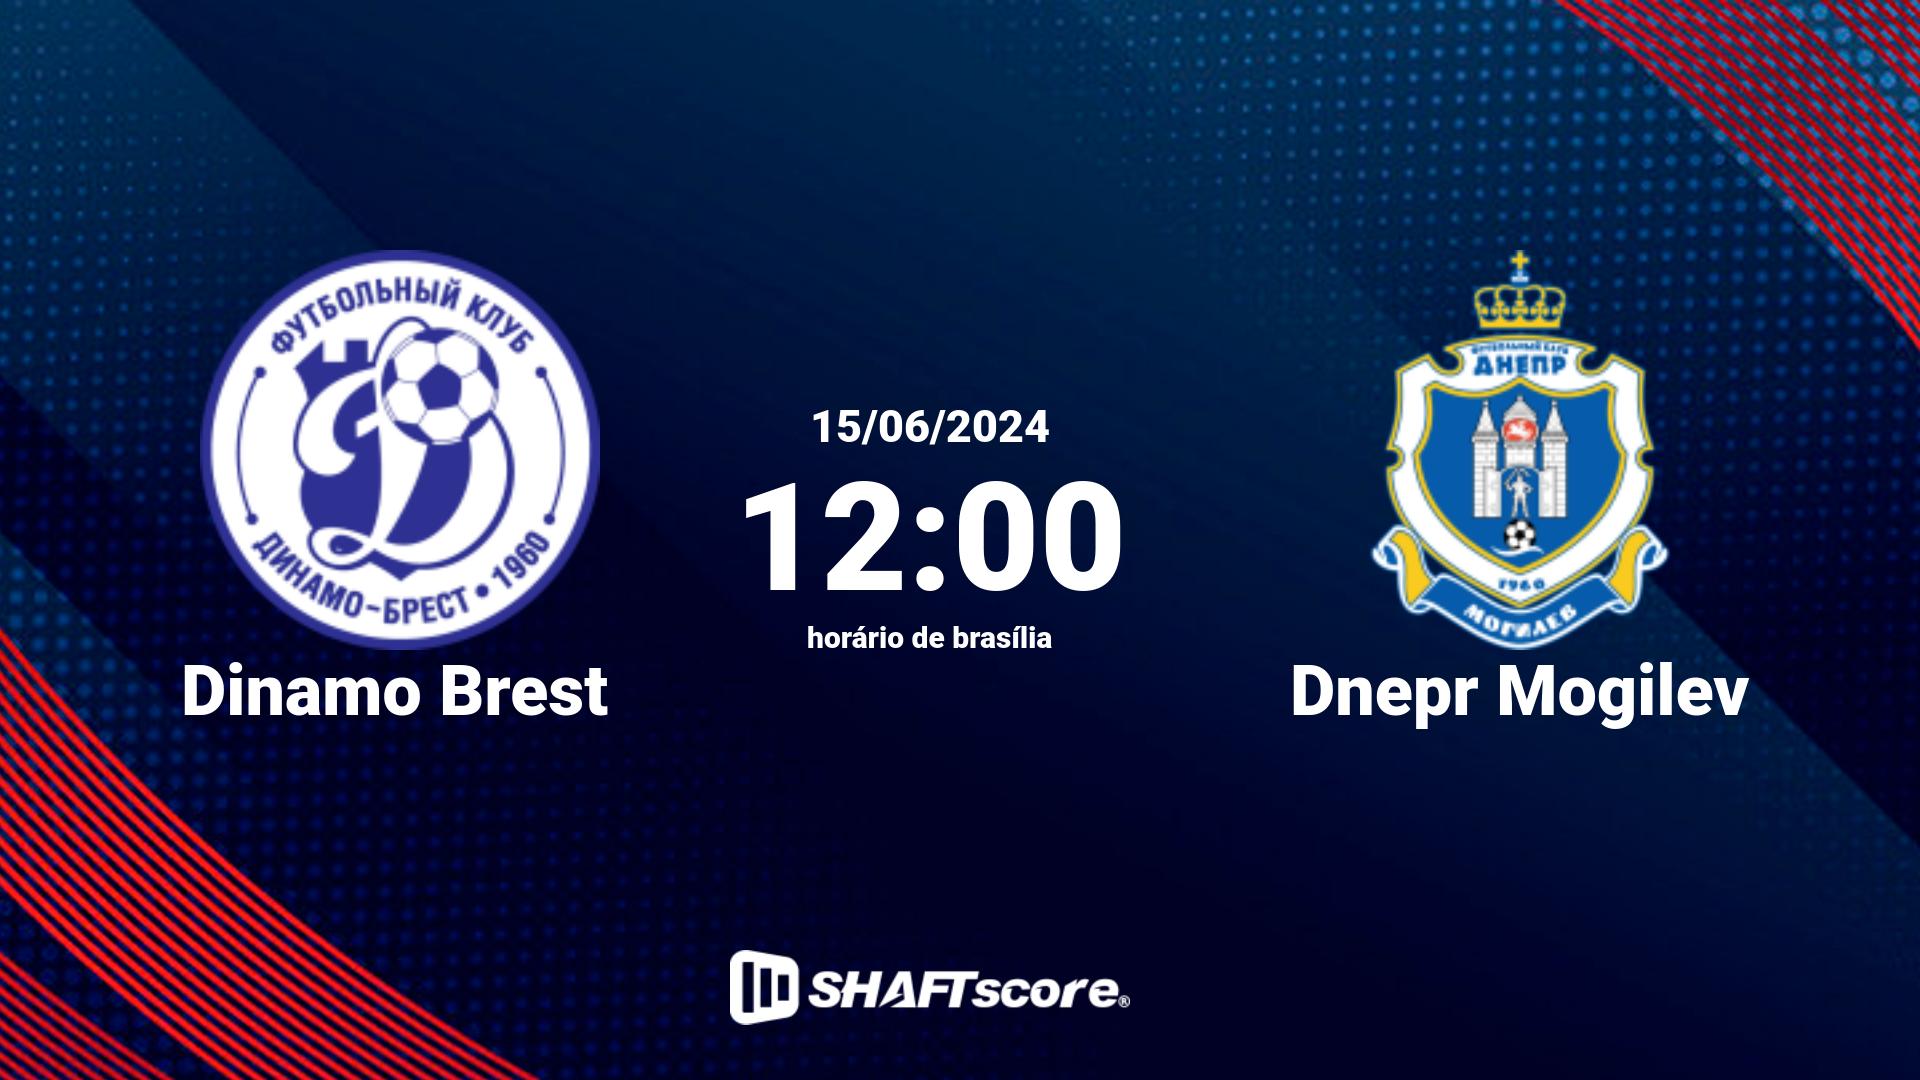 Estatísticas do jogo Dinamo Brest vs Dnepr Mogilev 15.06 12:00